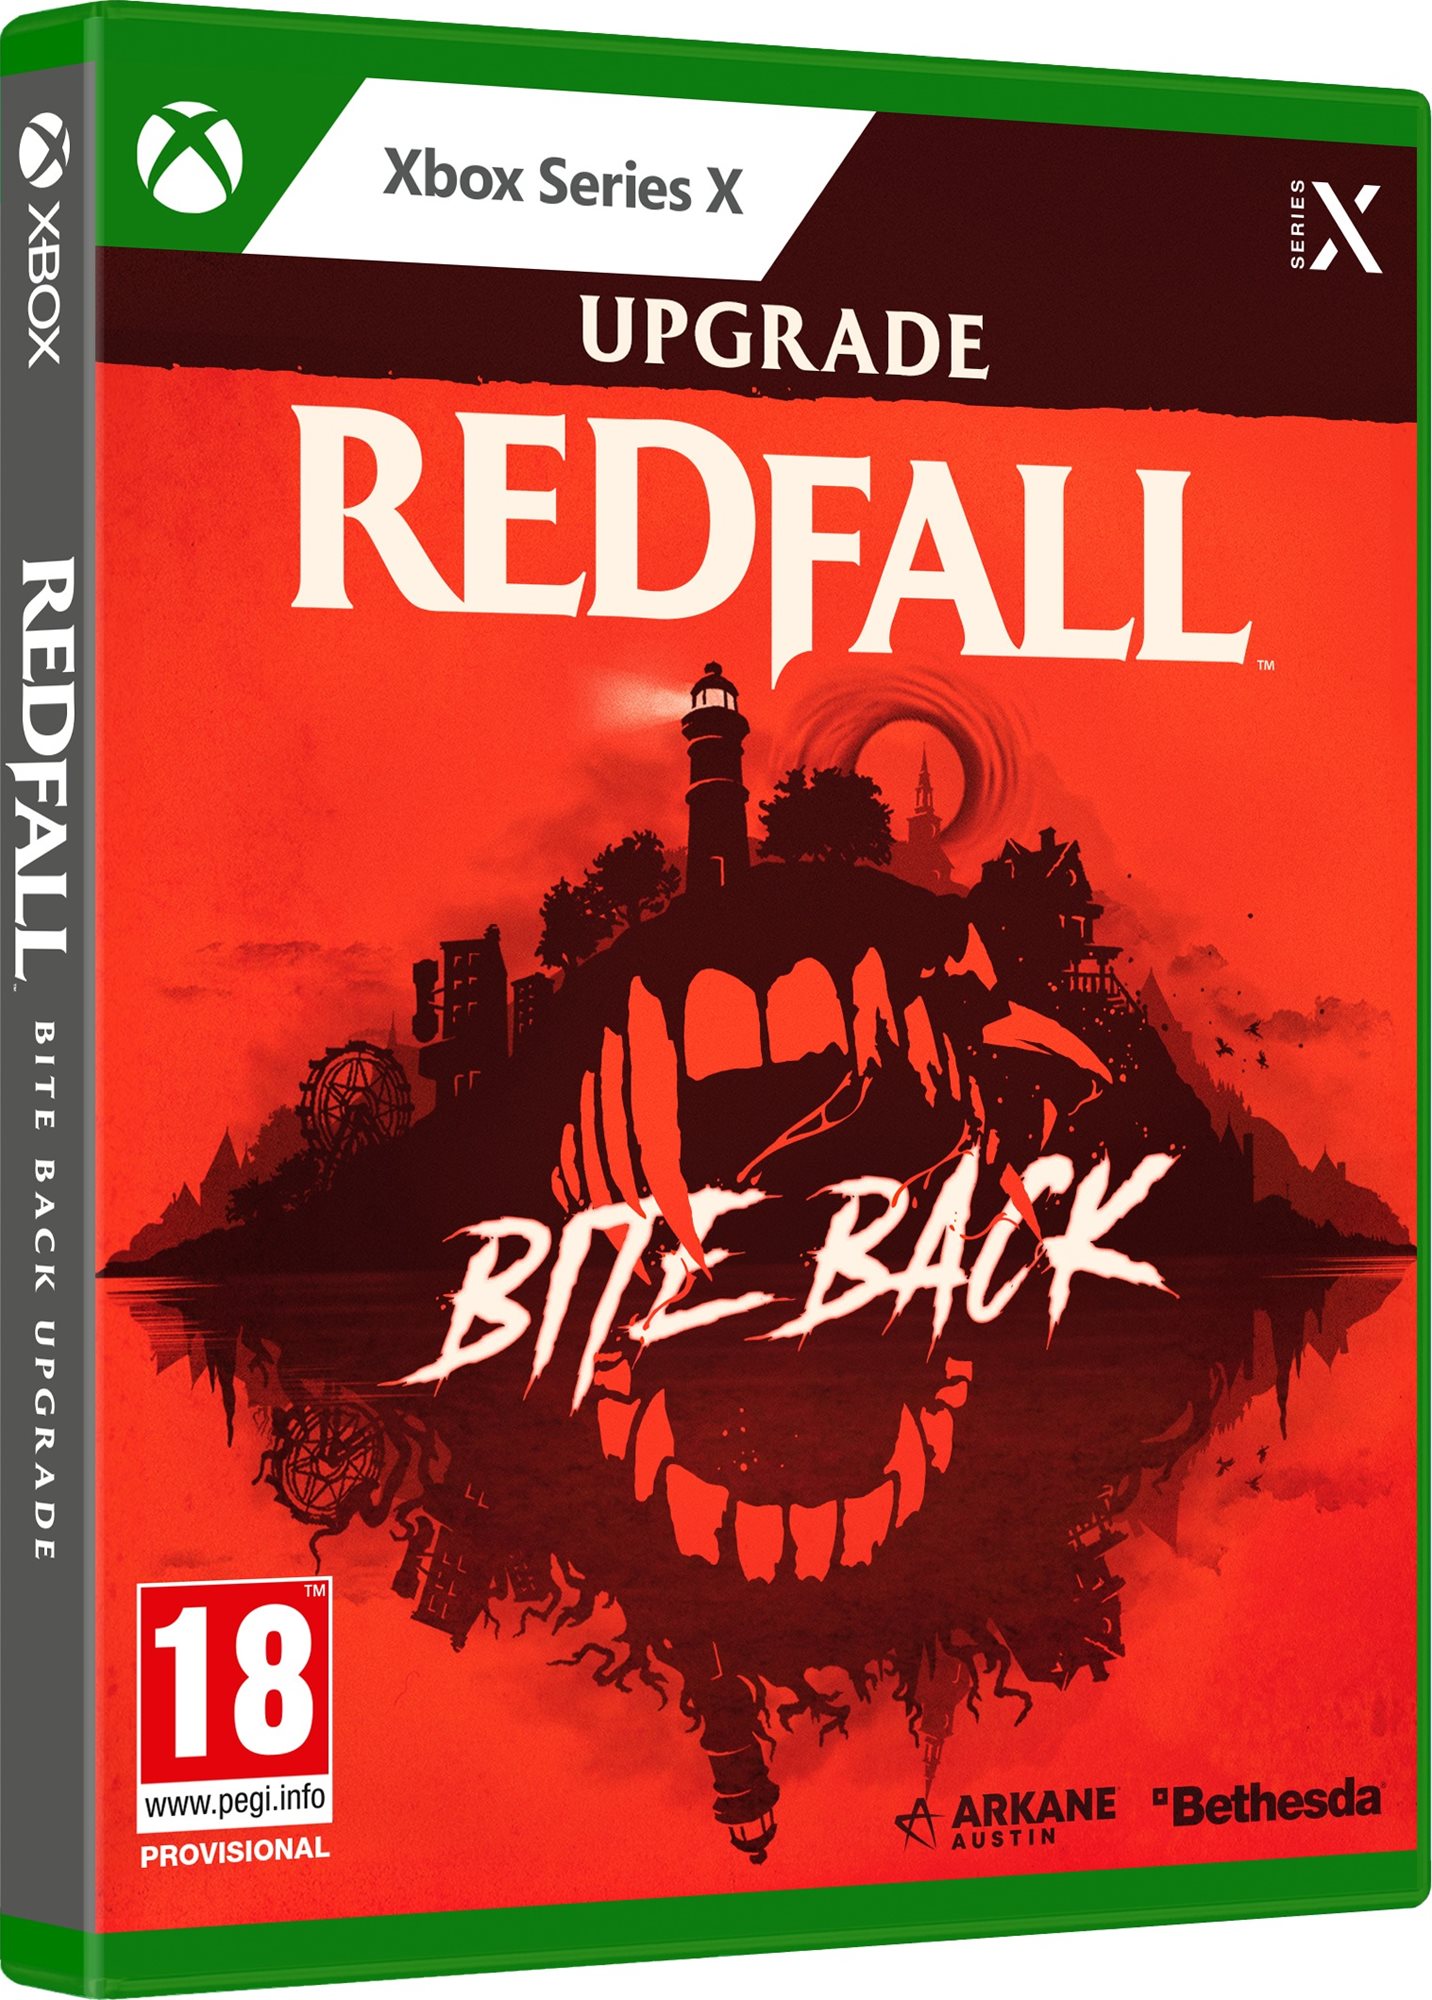 Redfall: Bite Back Upgrade - Xbox Series X